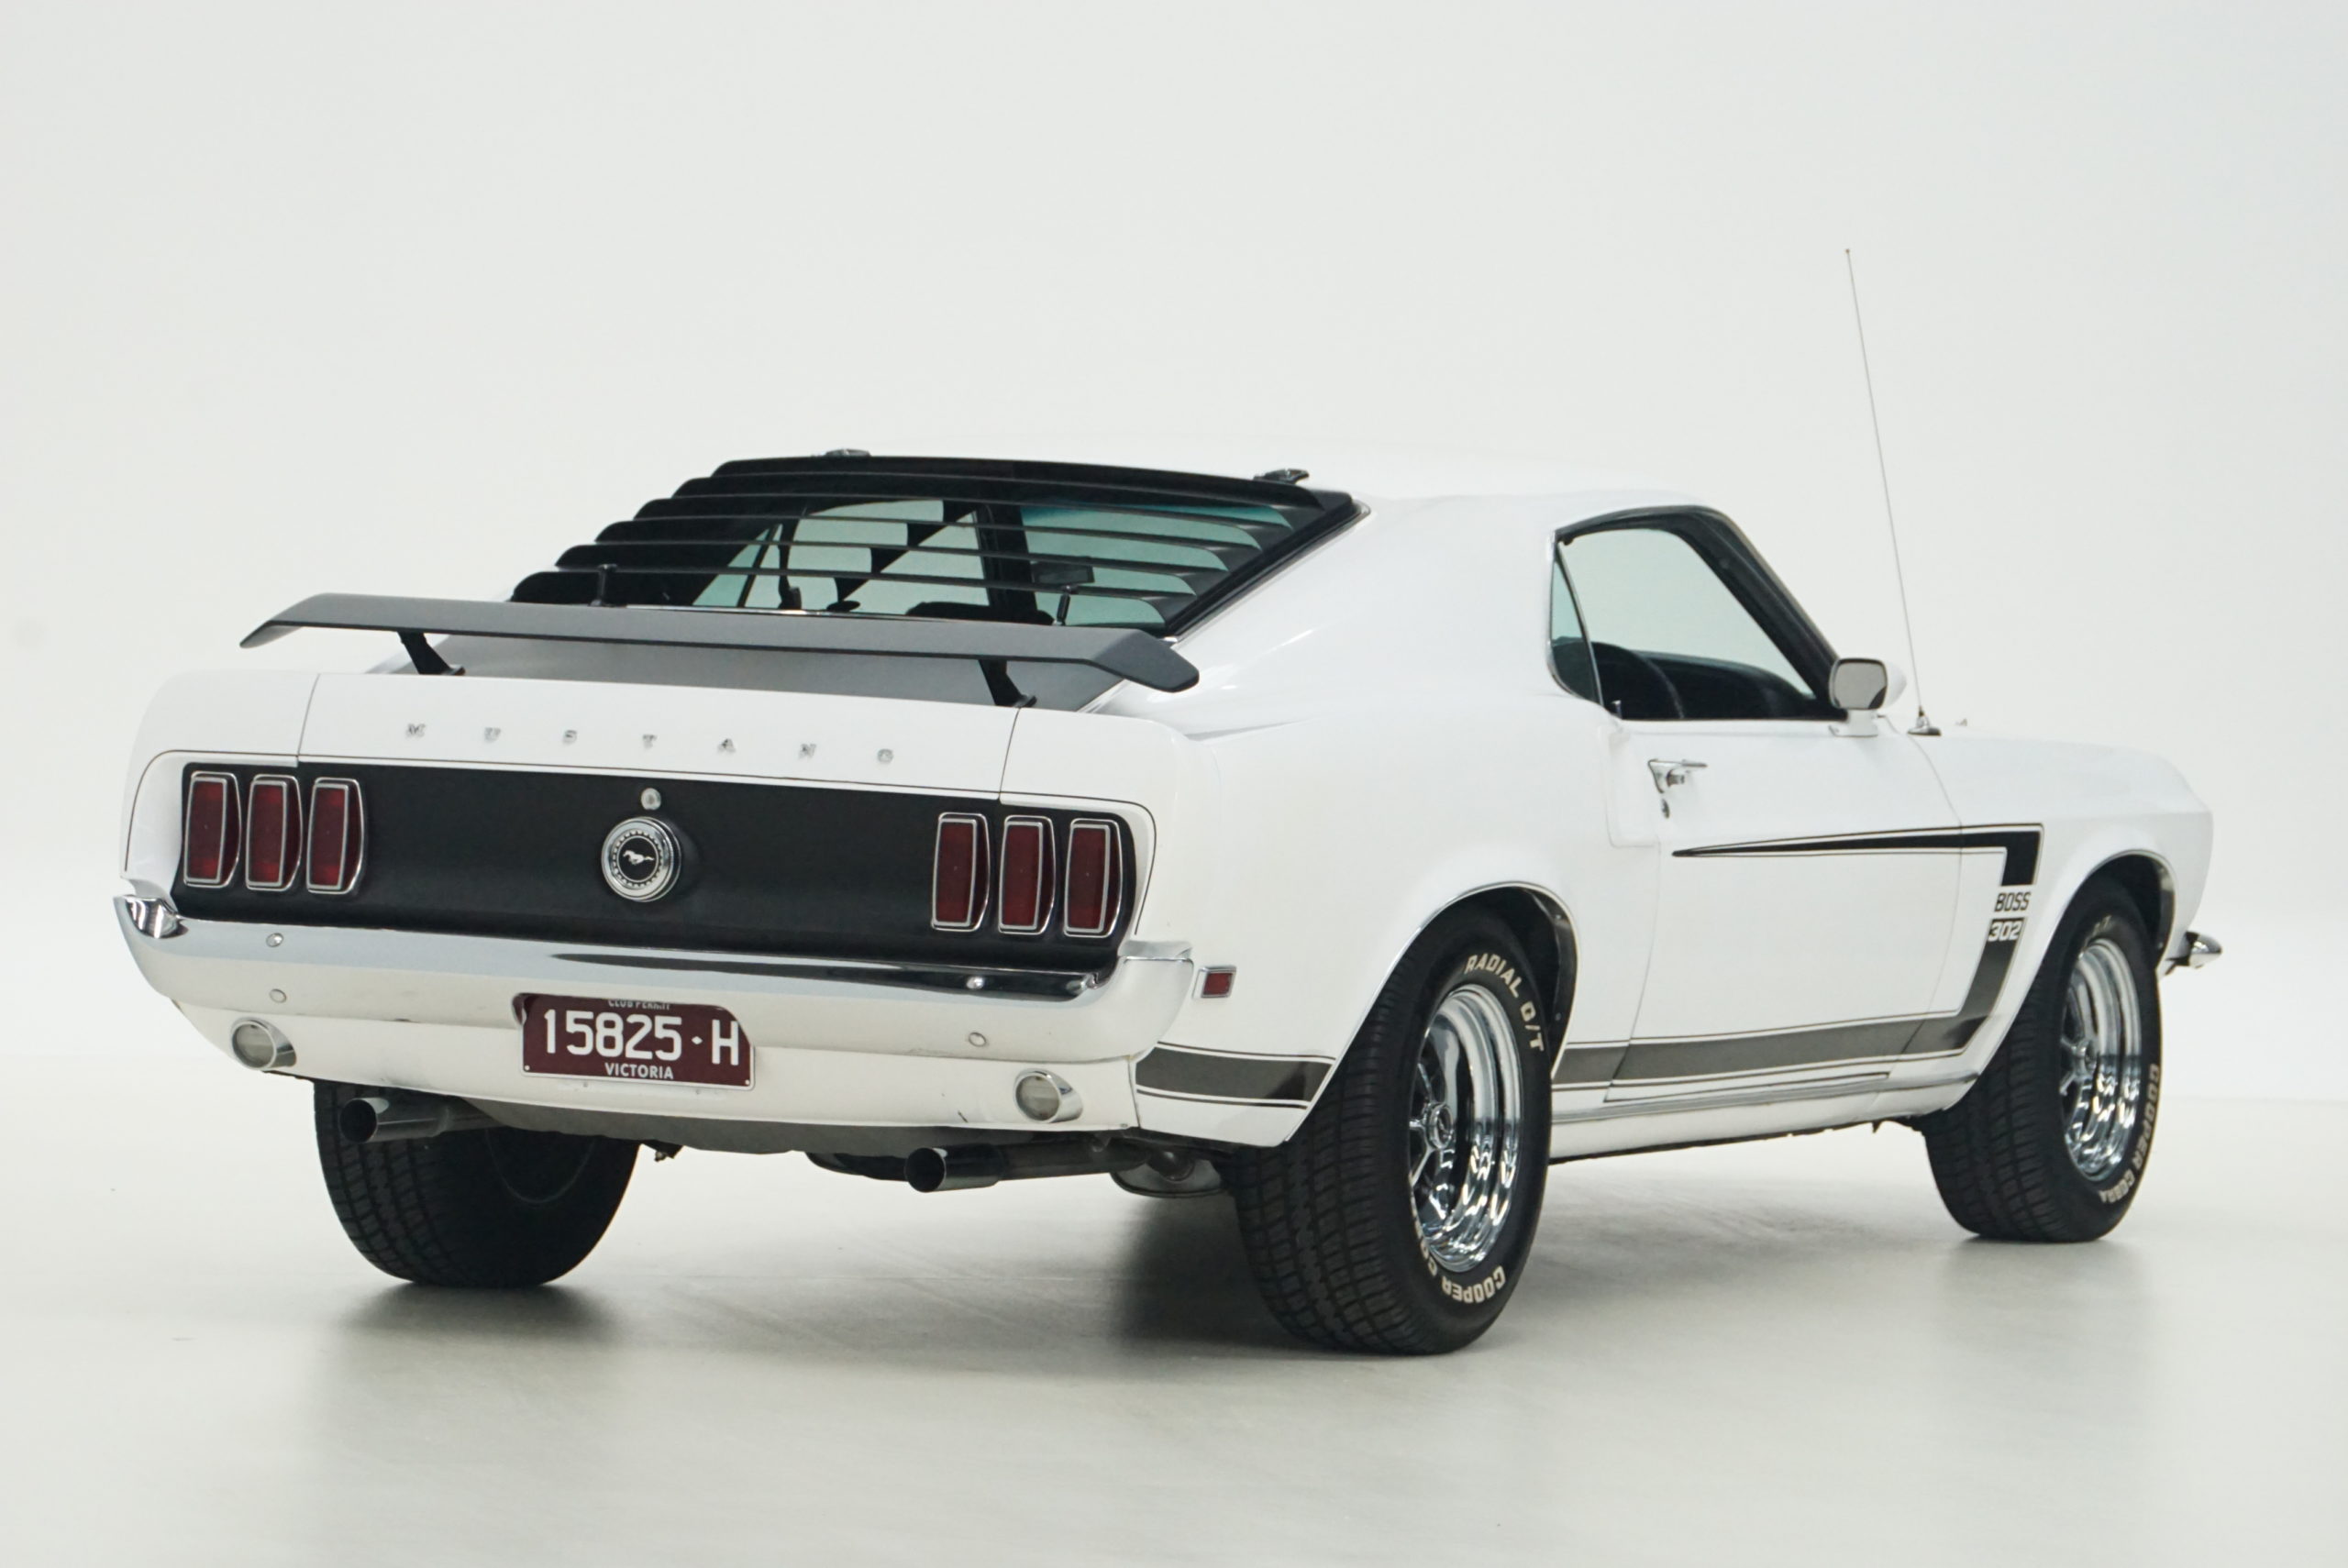 1969 Ford Mustang Boss 302 Tribute Fastback trois quarts arrière droit - Shannons Auctions avril 2021.